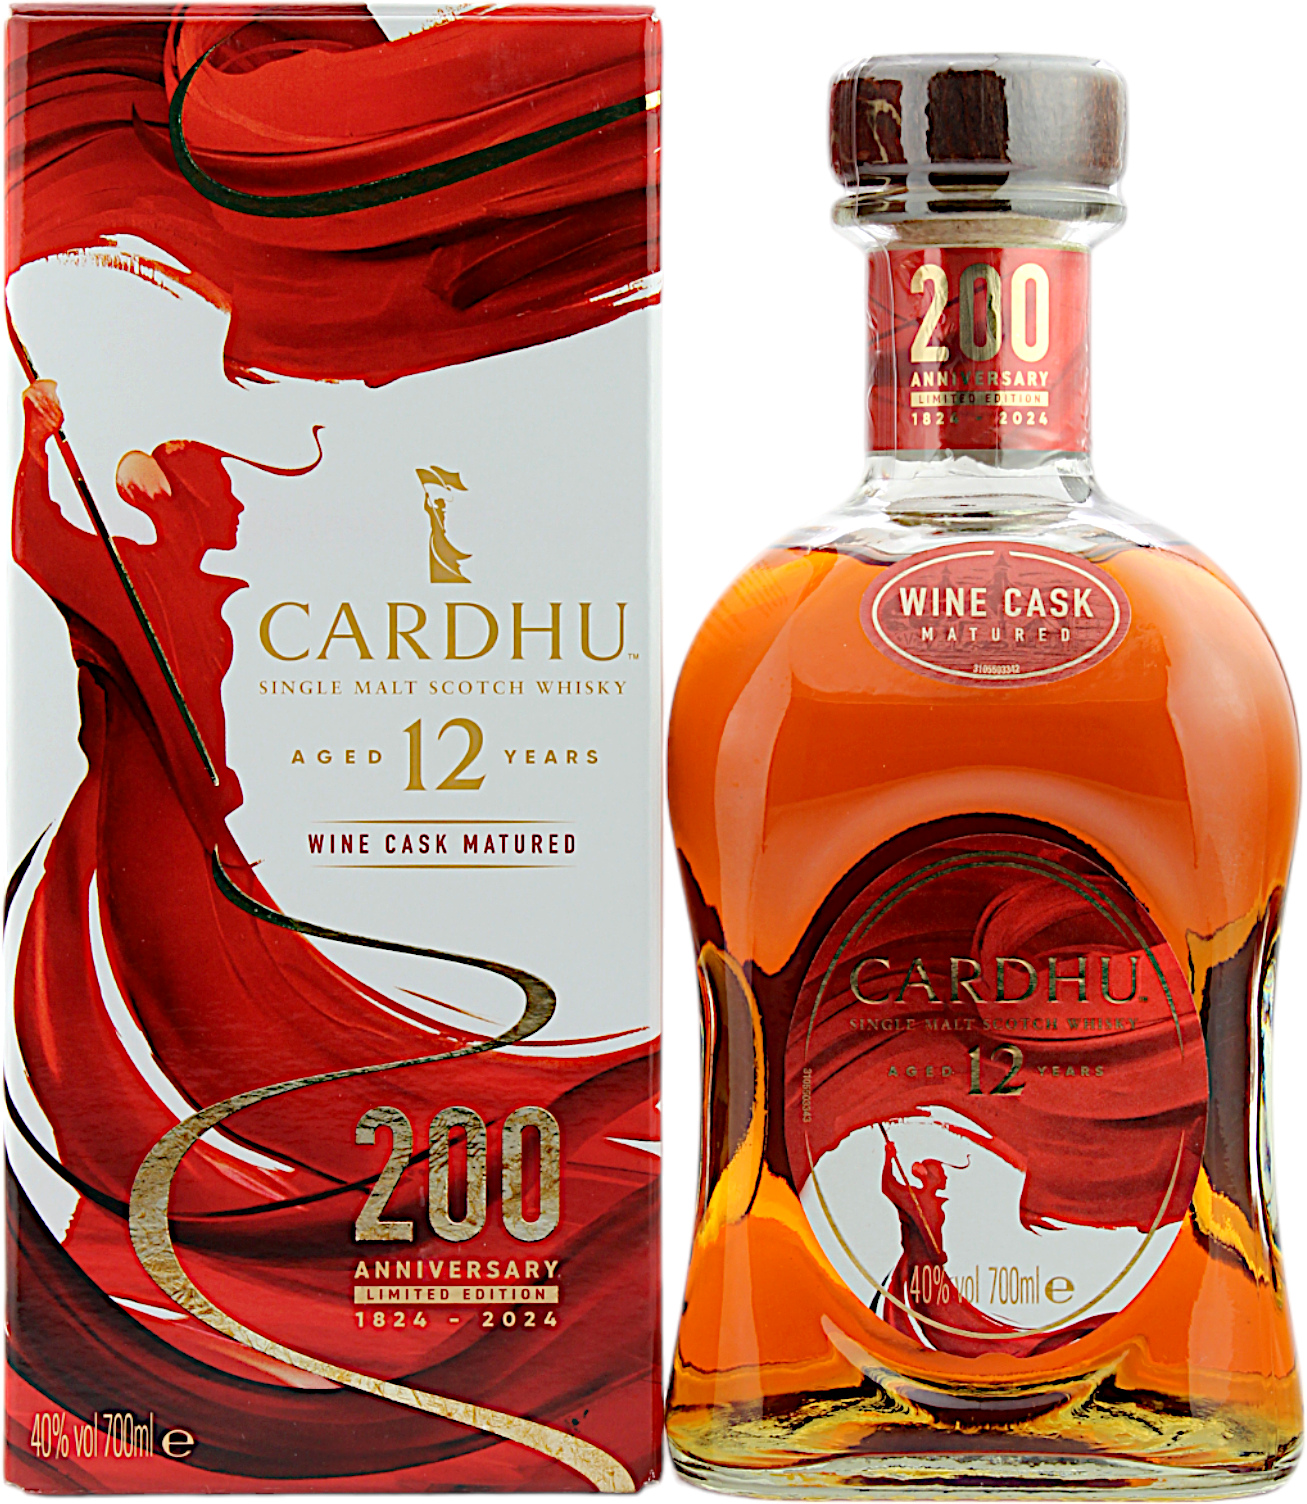 Cardhu 12 Jahre 200th Anniversary Wine Cask 40.0% 0,7l